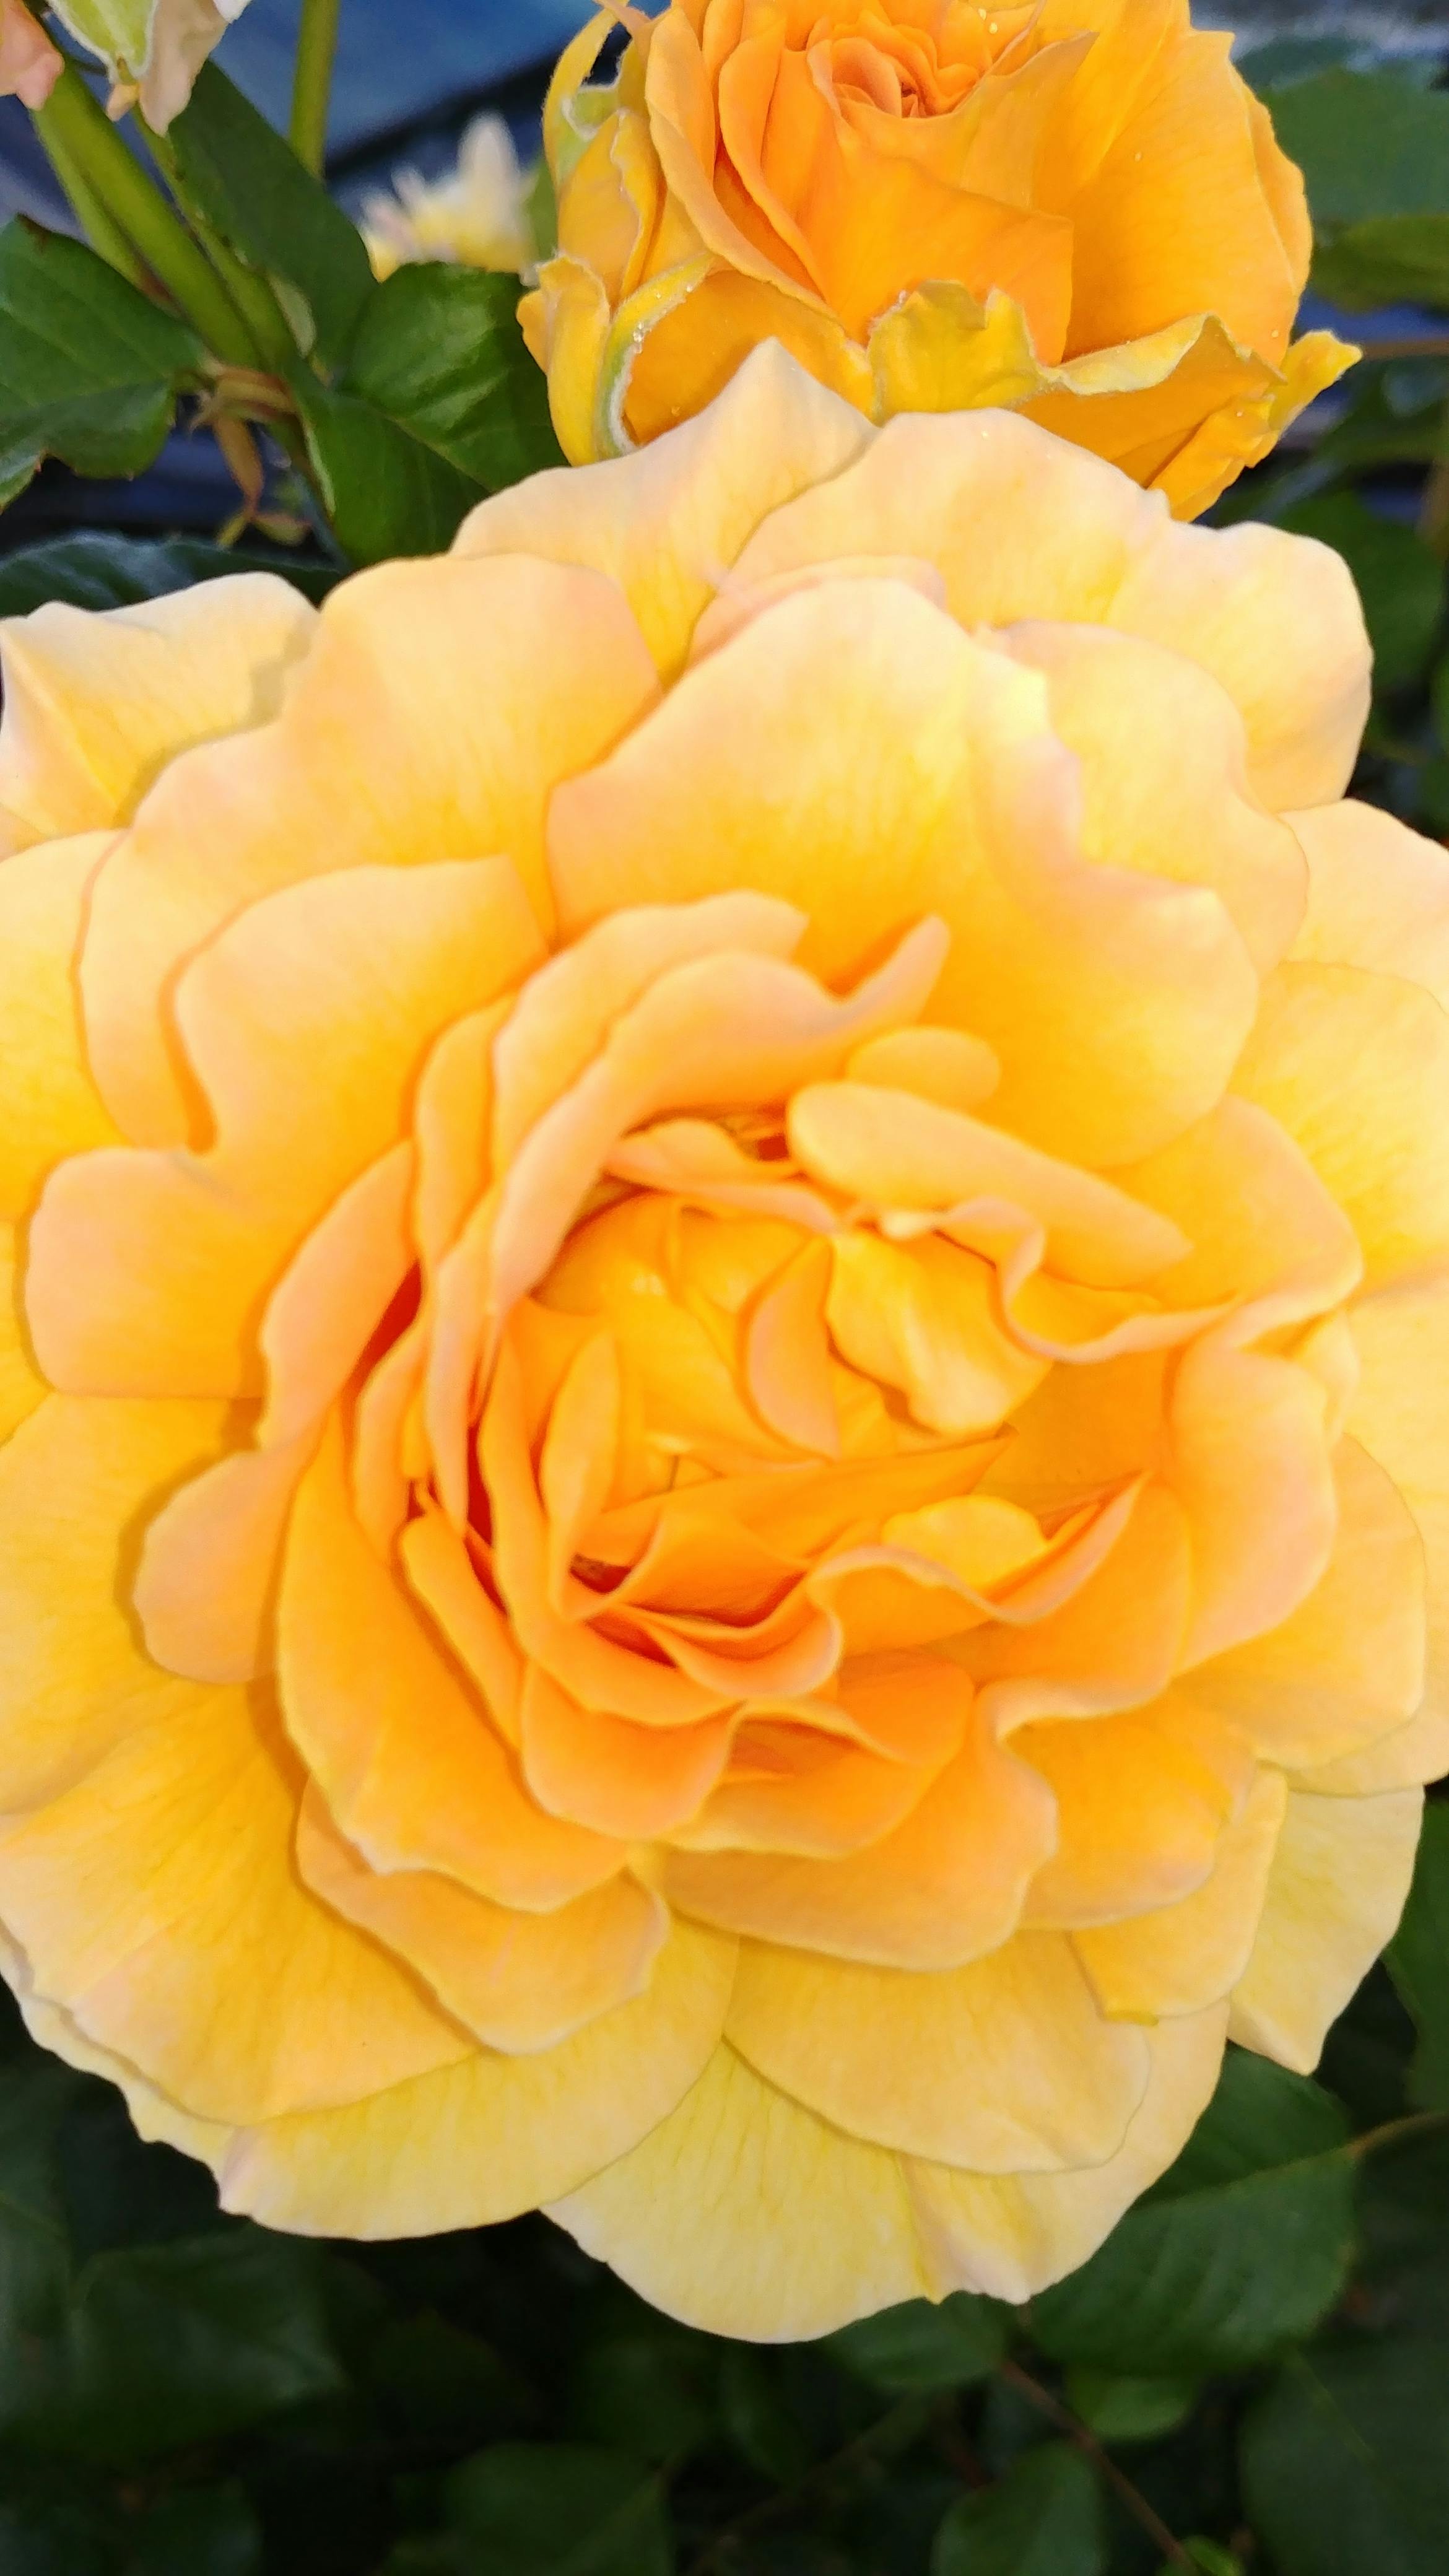 Free stock photo of golden yellow, yellow flower, yellow rose